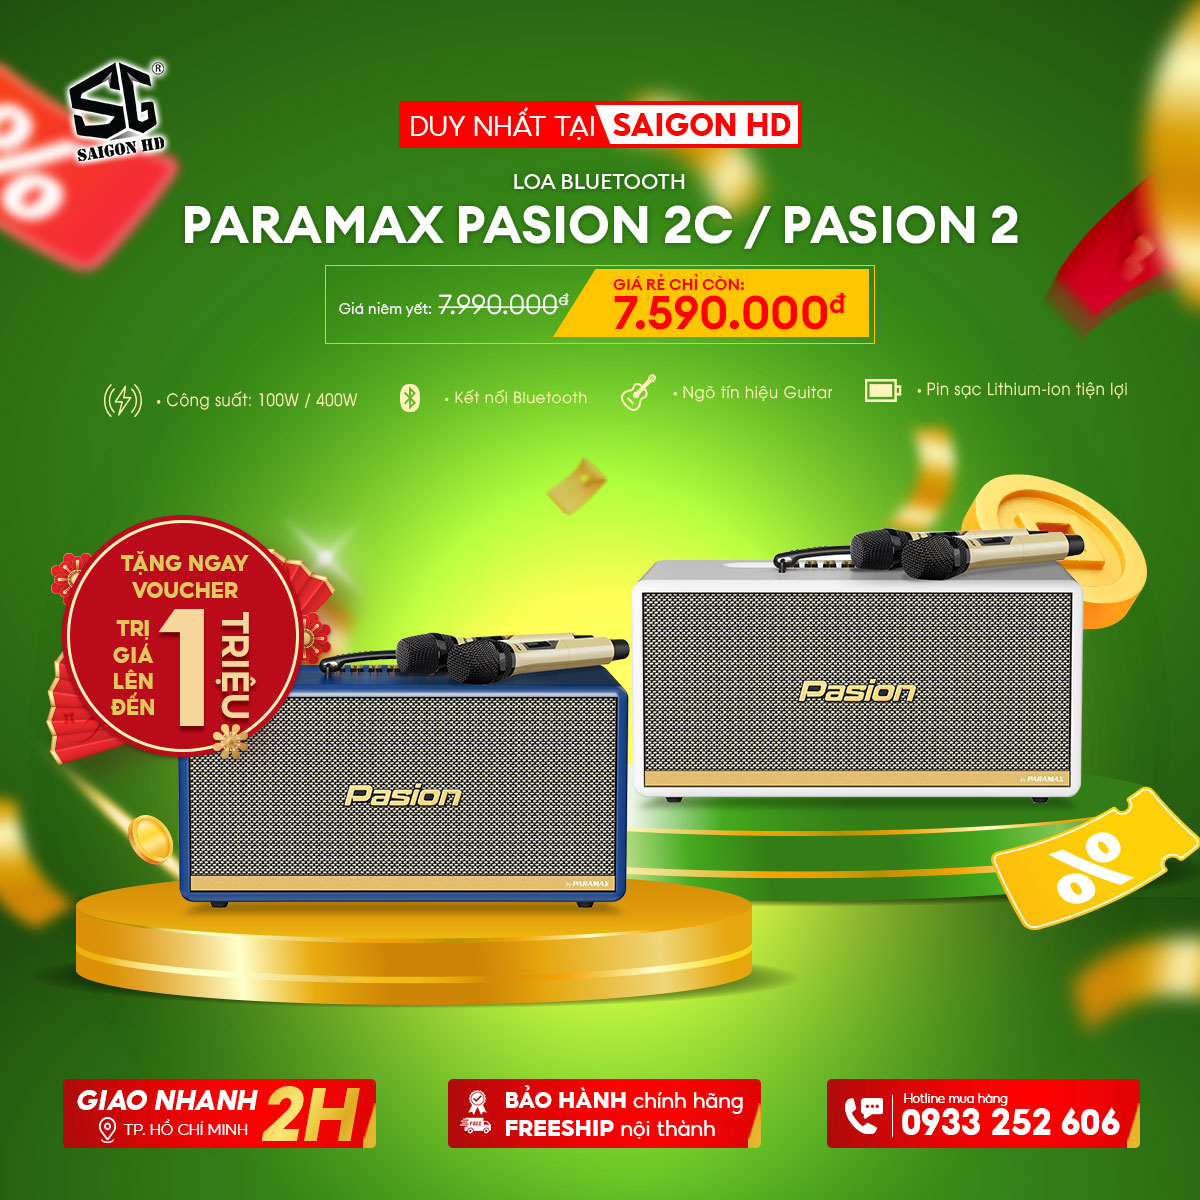 Loa Paramax Pasion 2 - Pasion 2C